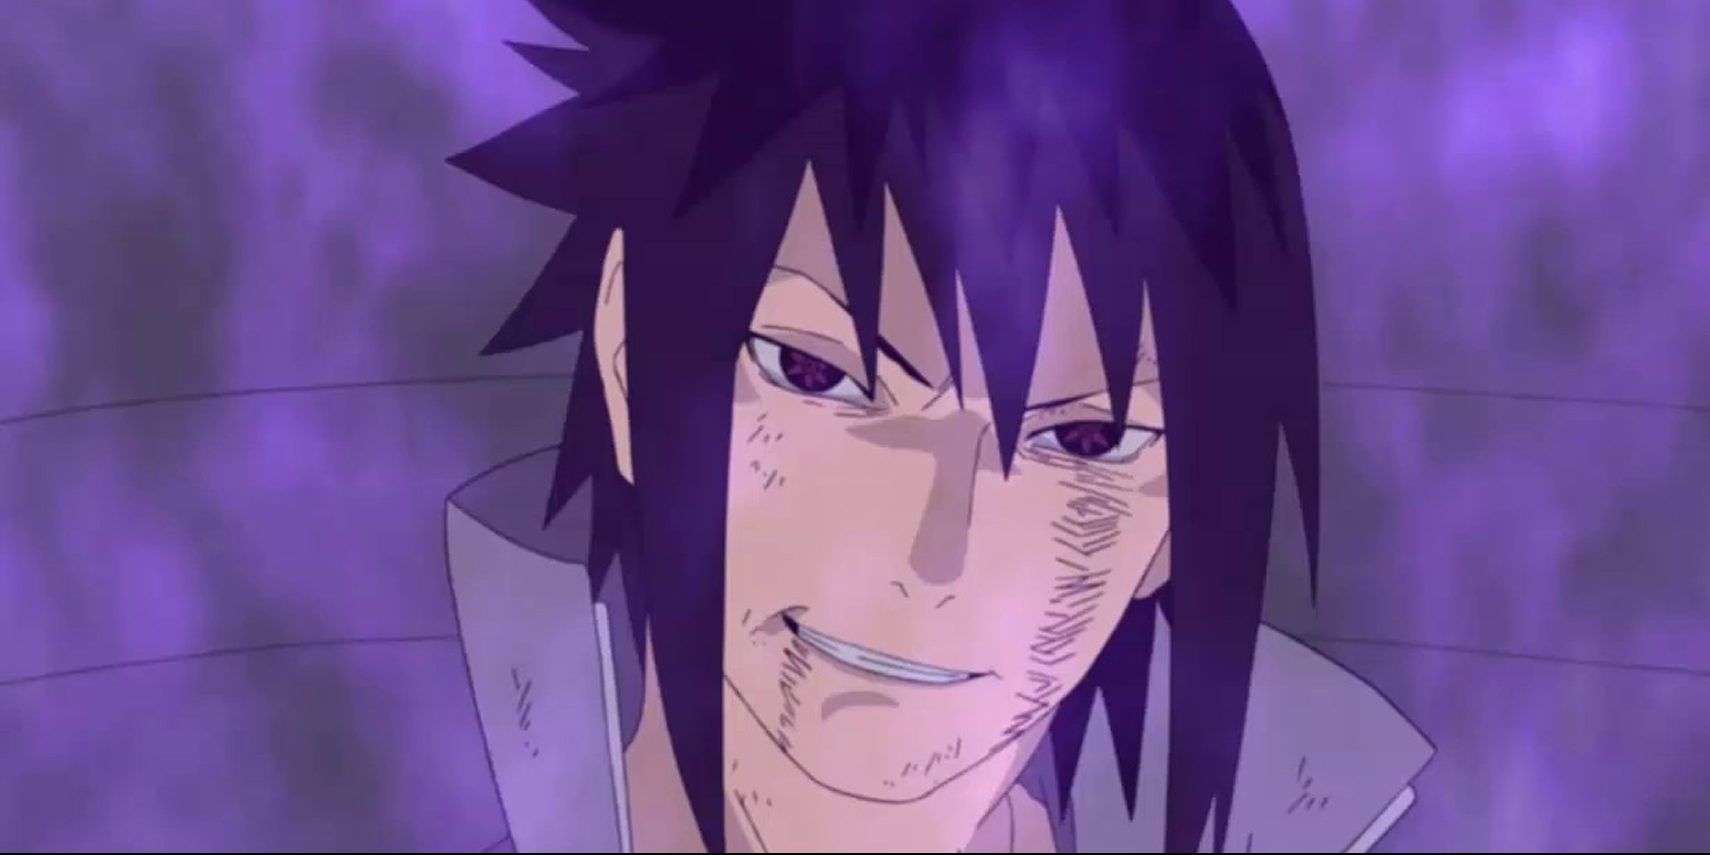 Sasuke with an evil grin in Naruto.